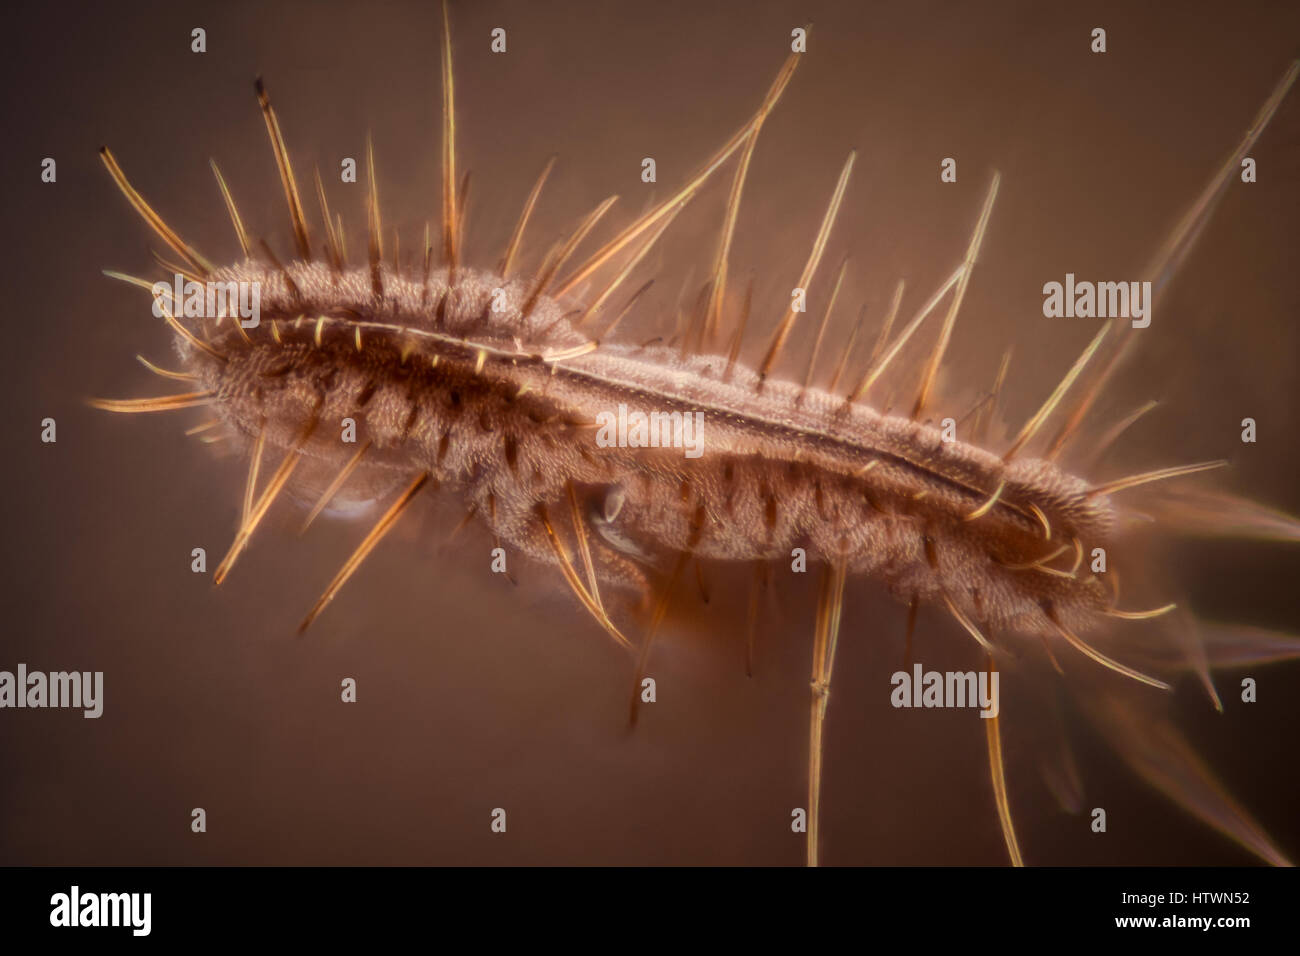 Extreme magnification - Fly proboscis, 20x Stock Photo